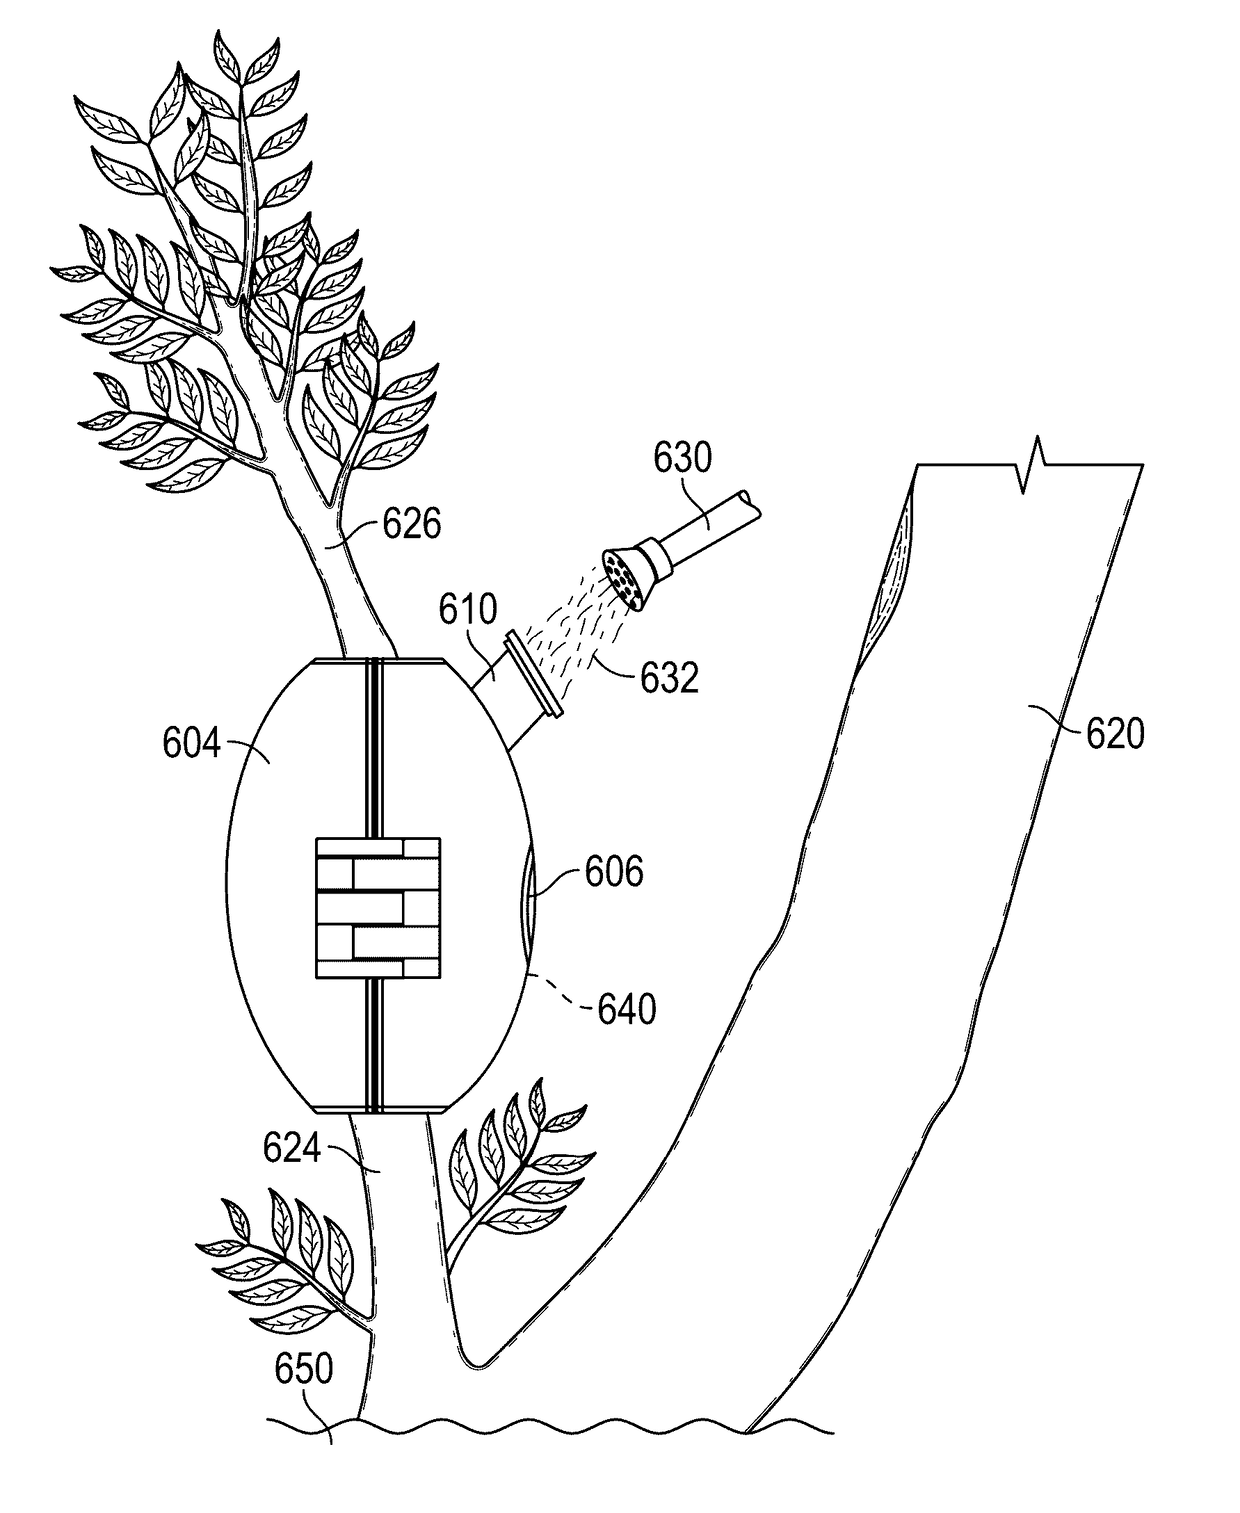 Plant Limb Root Germination Method and Apparatus